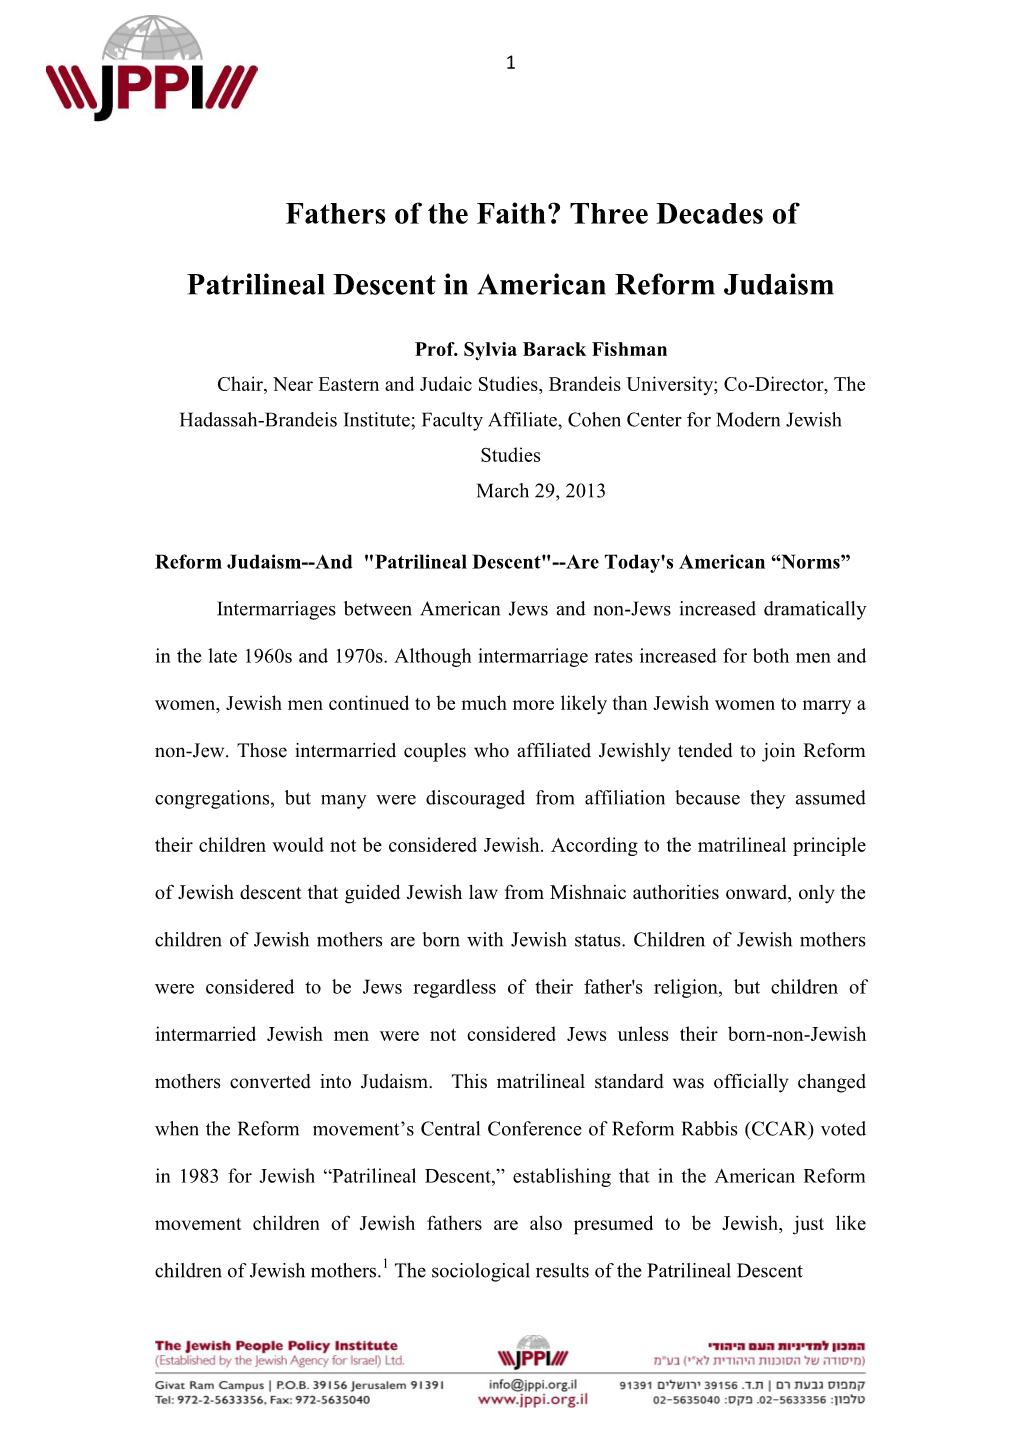 Three Decades of Patrilineal Descent in American Reform Judaism